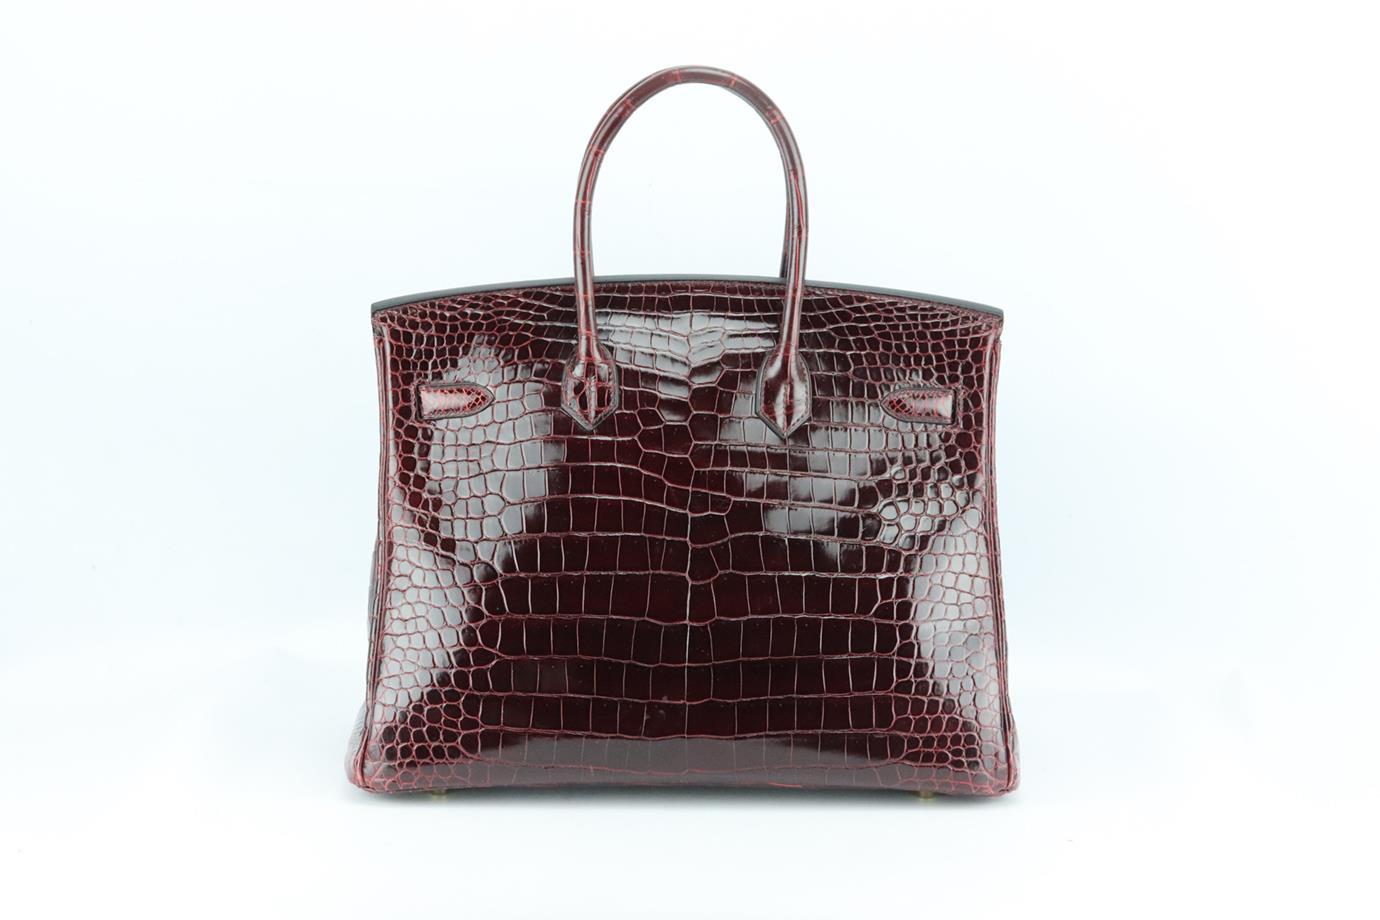 Hermès 2013 Birkin 35cm Porosus Crocodile Leather Bag In Excellent Condition For Sale In London, GB